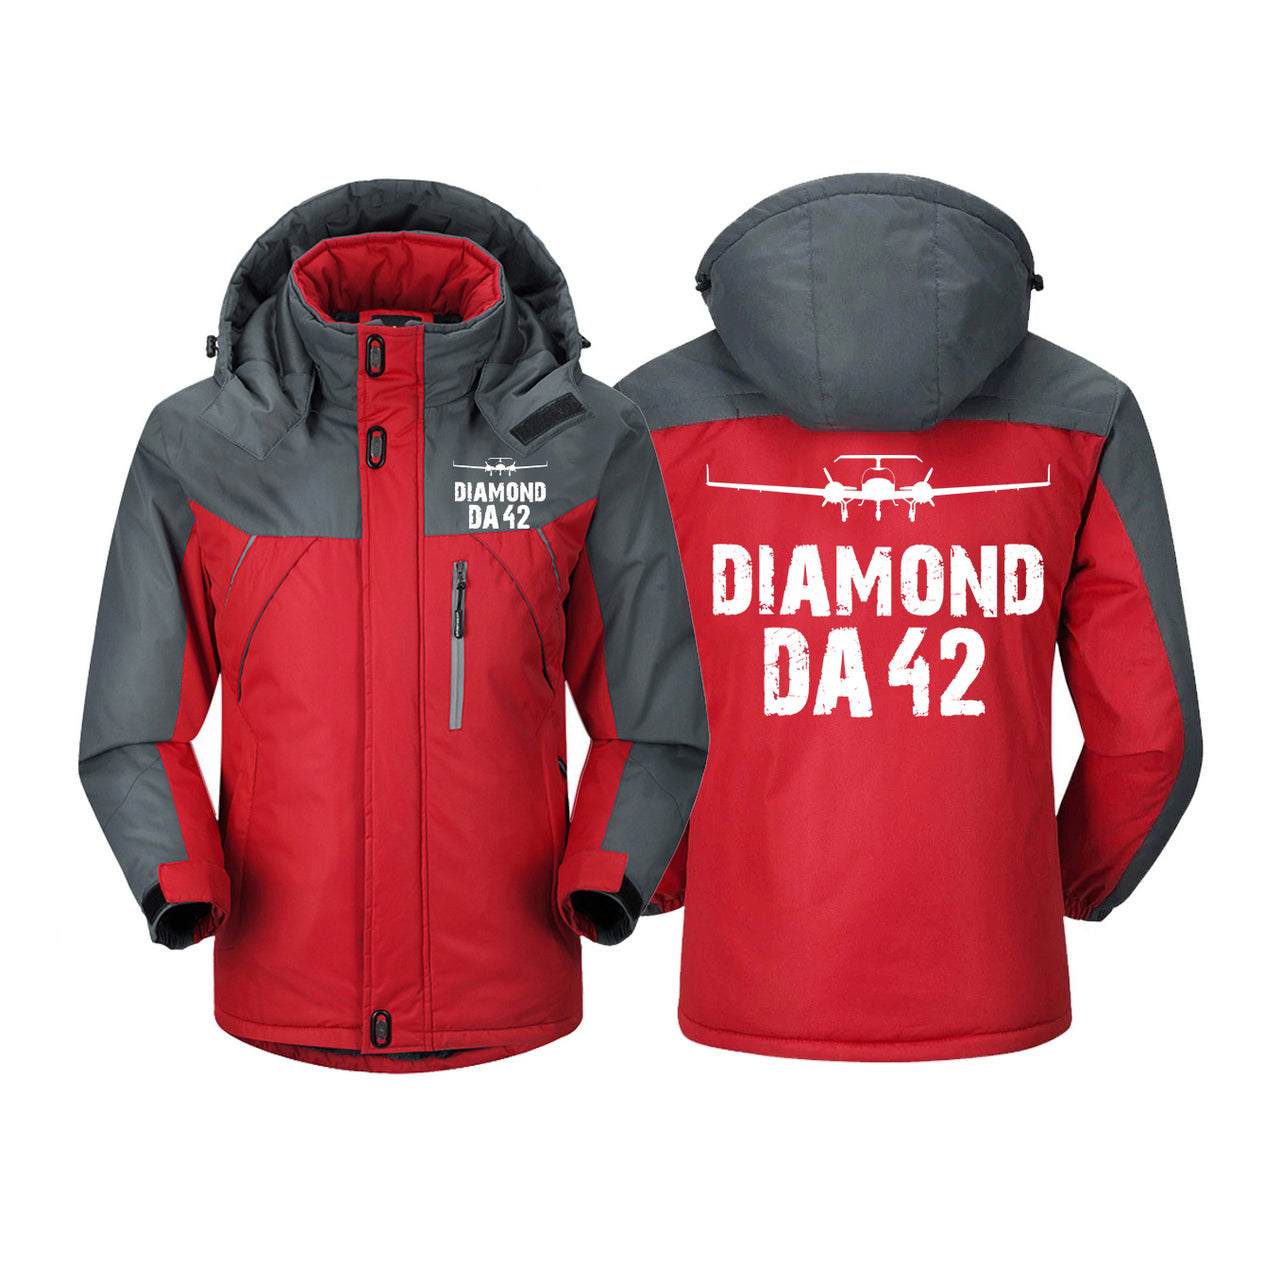 Diamond DA42 & Plane Designed Thick Winter Jackets